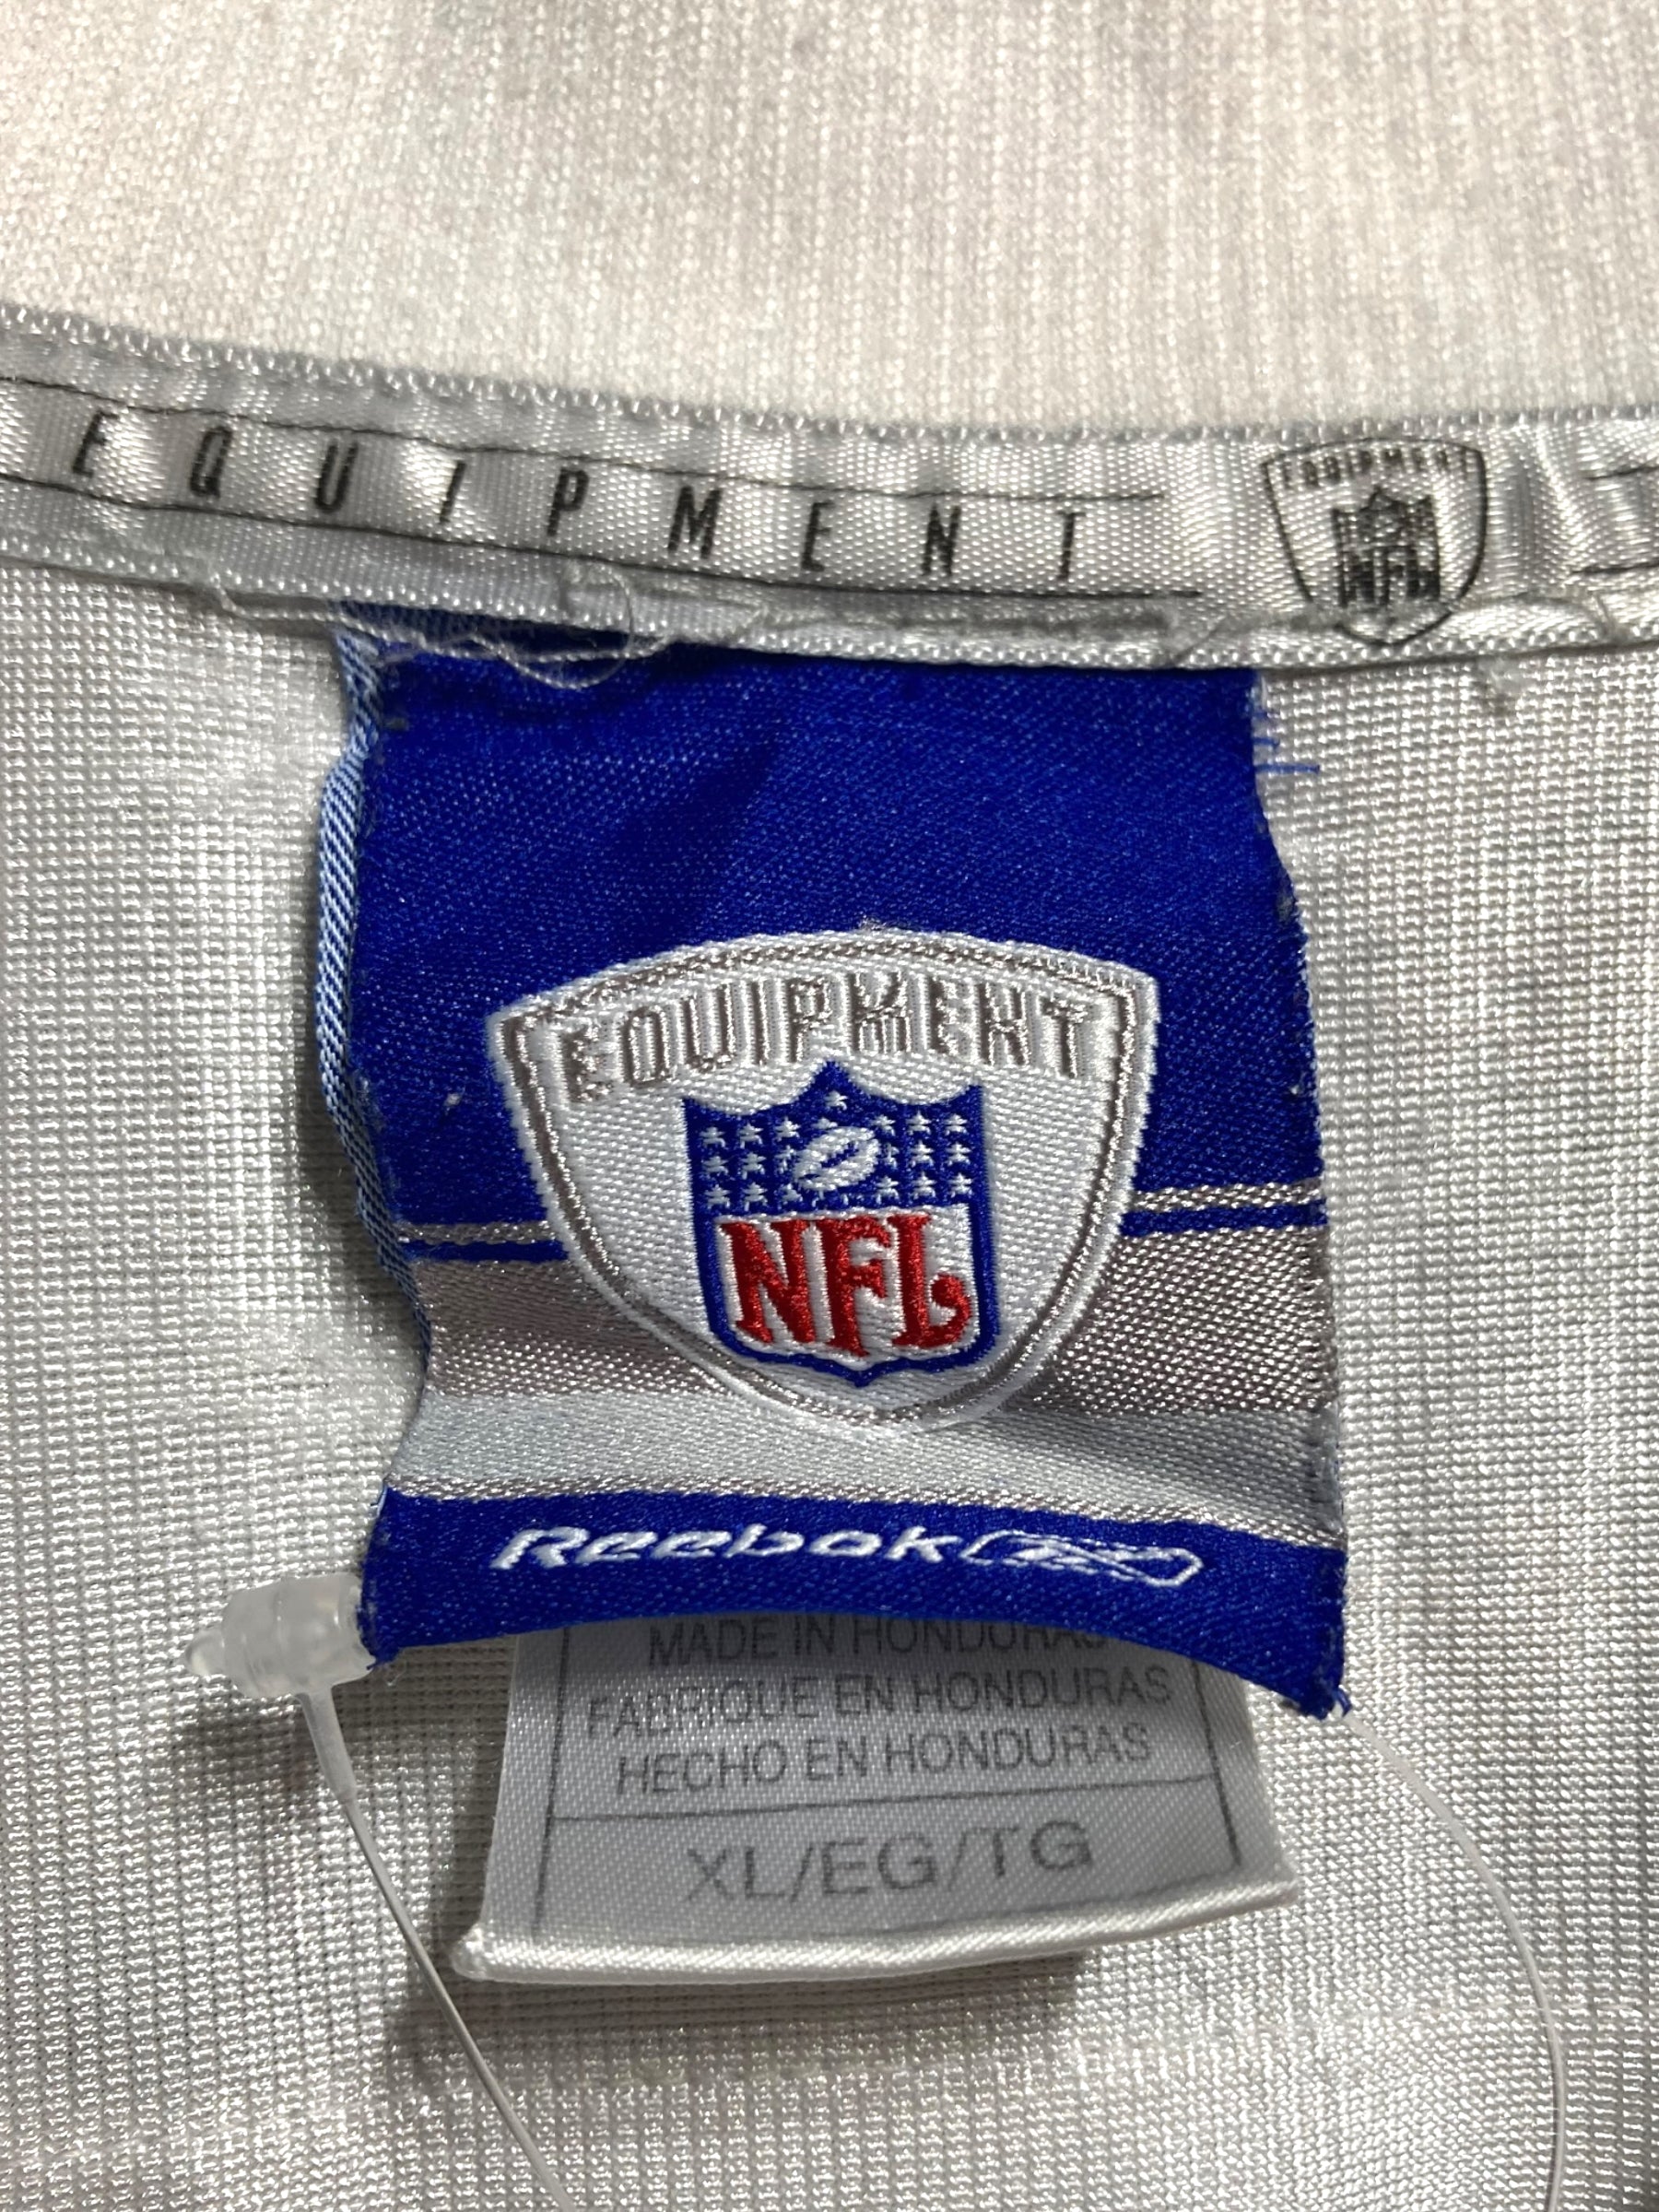 NFL RAIDERS レイダース Reebok リーボック ゲームシャツ ユニフォーム